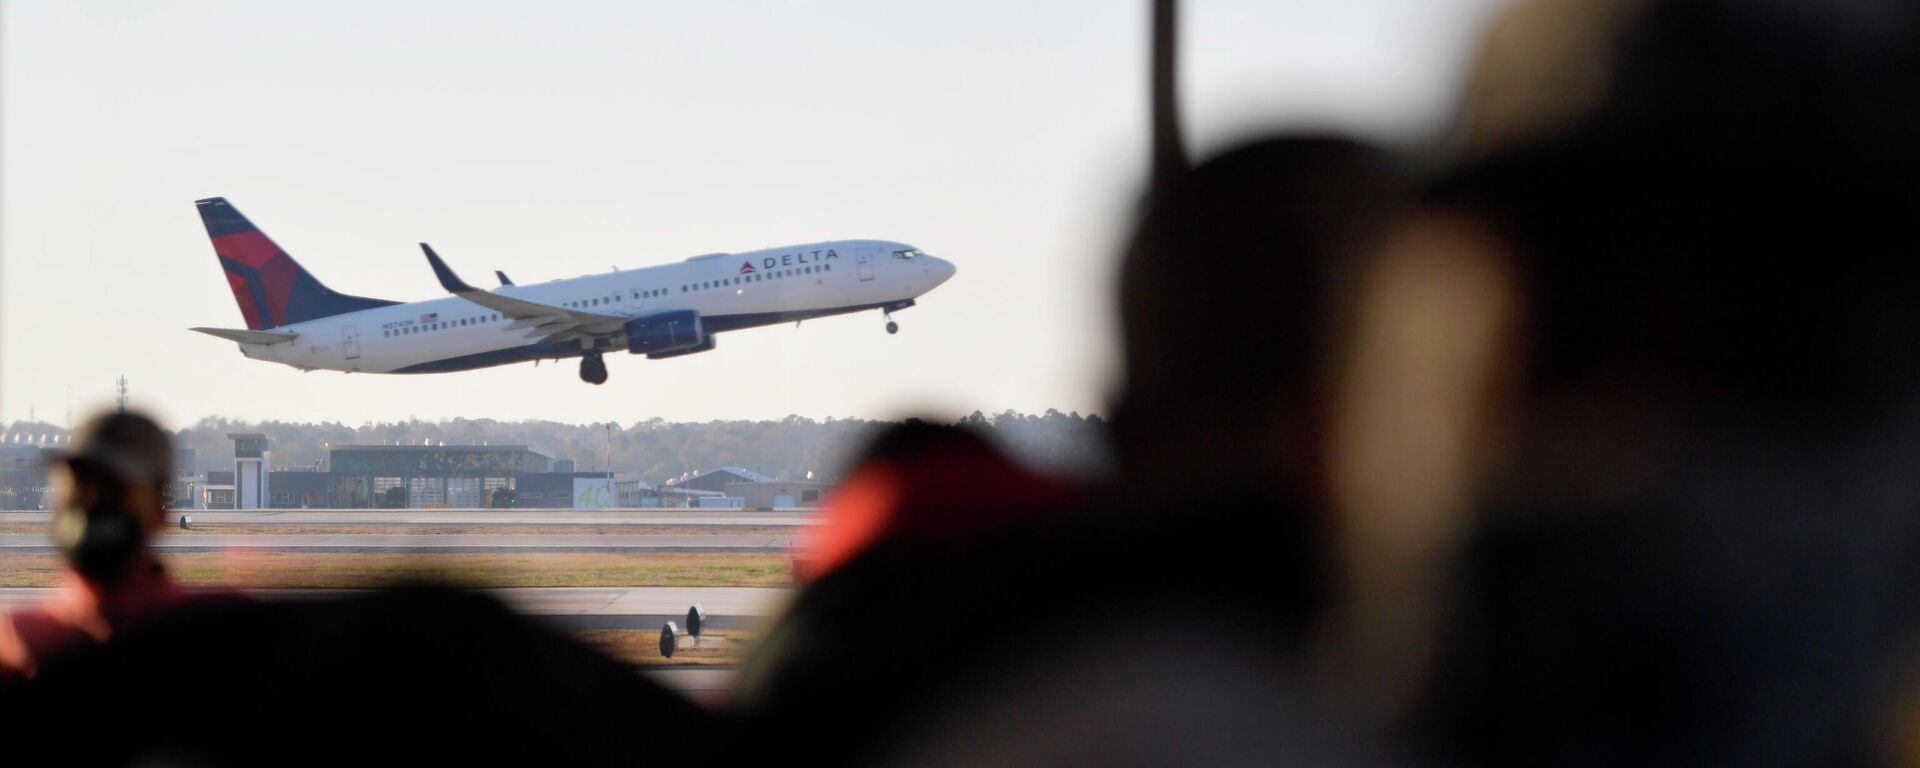 A Delta Airlines aircraft takes off as passengers await the boarding process, Thursday, Dec. 2, 2021, at Hartsfield-Jackson Atlanta International Airport, in Atlanta. - Sputnik International, 1920, 25.07.2022